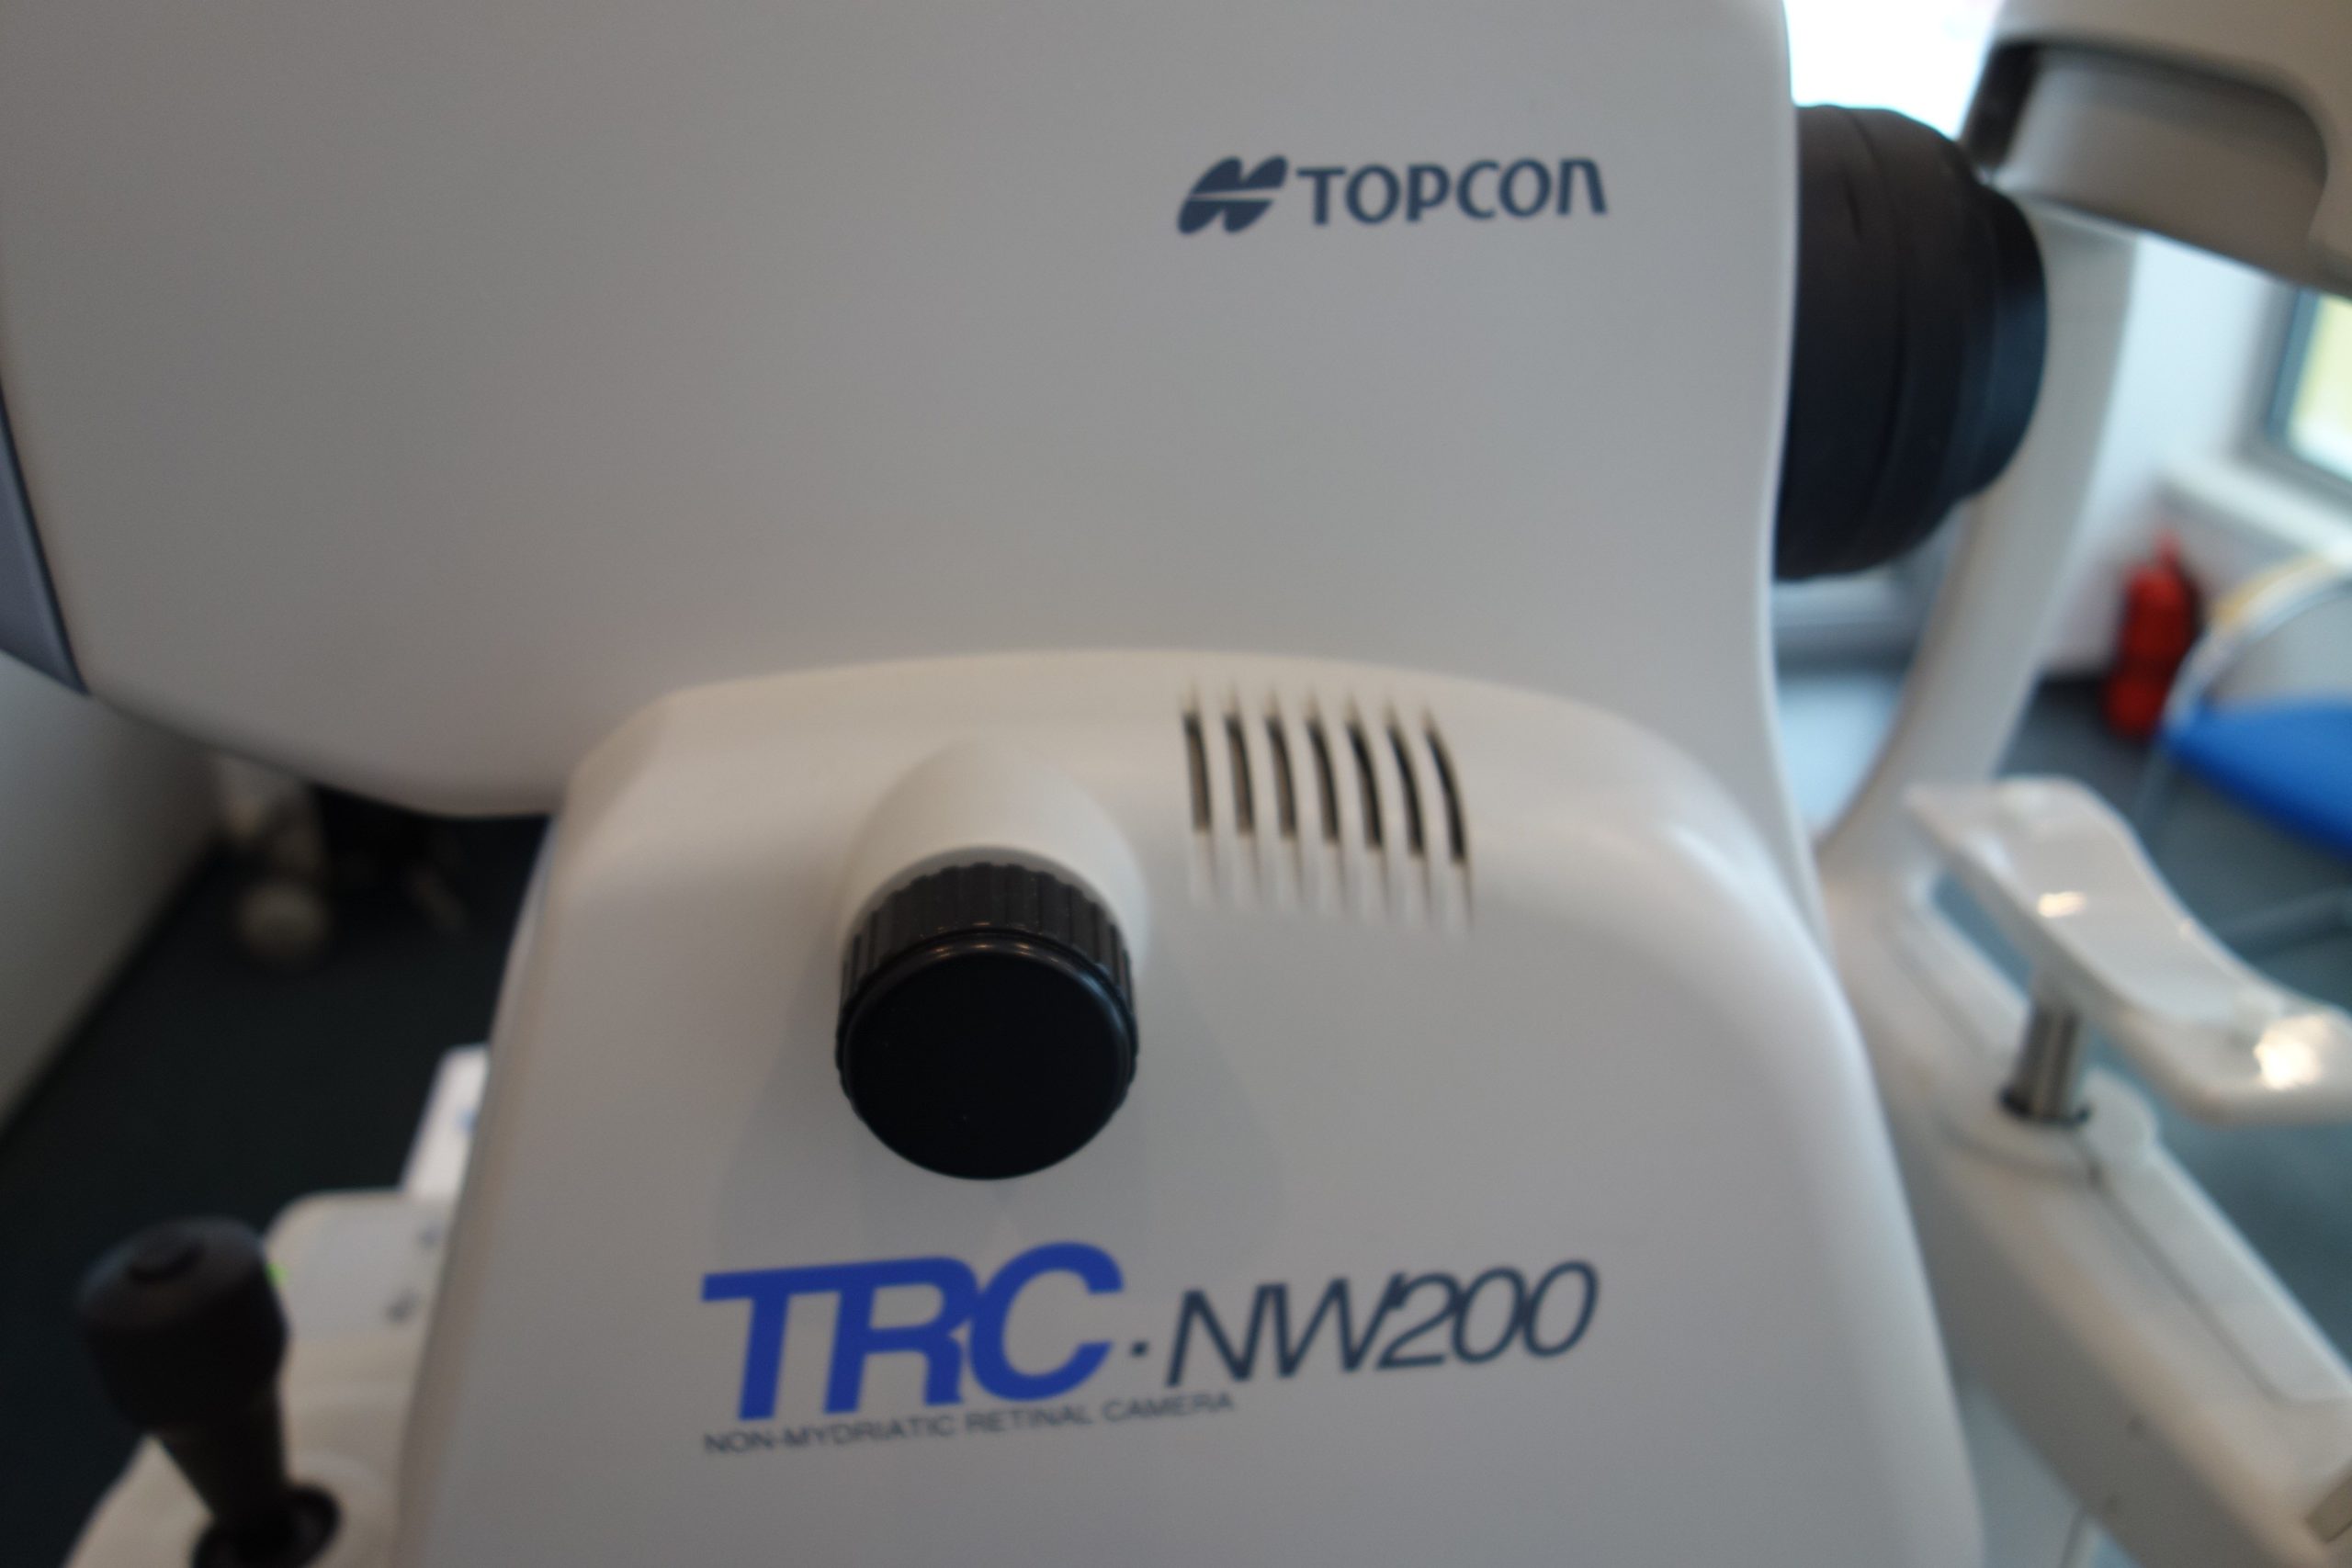 topcon-trc-nw200-non-mydriatic-retinal-camera-funduskamera-2539